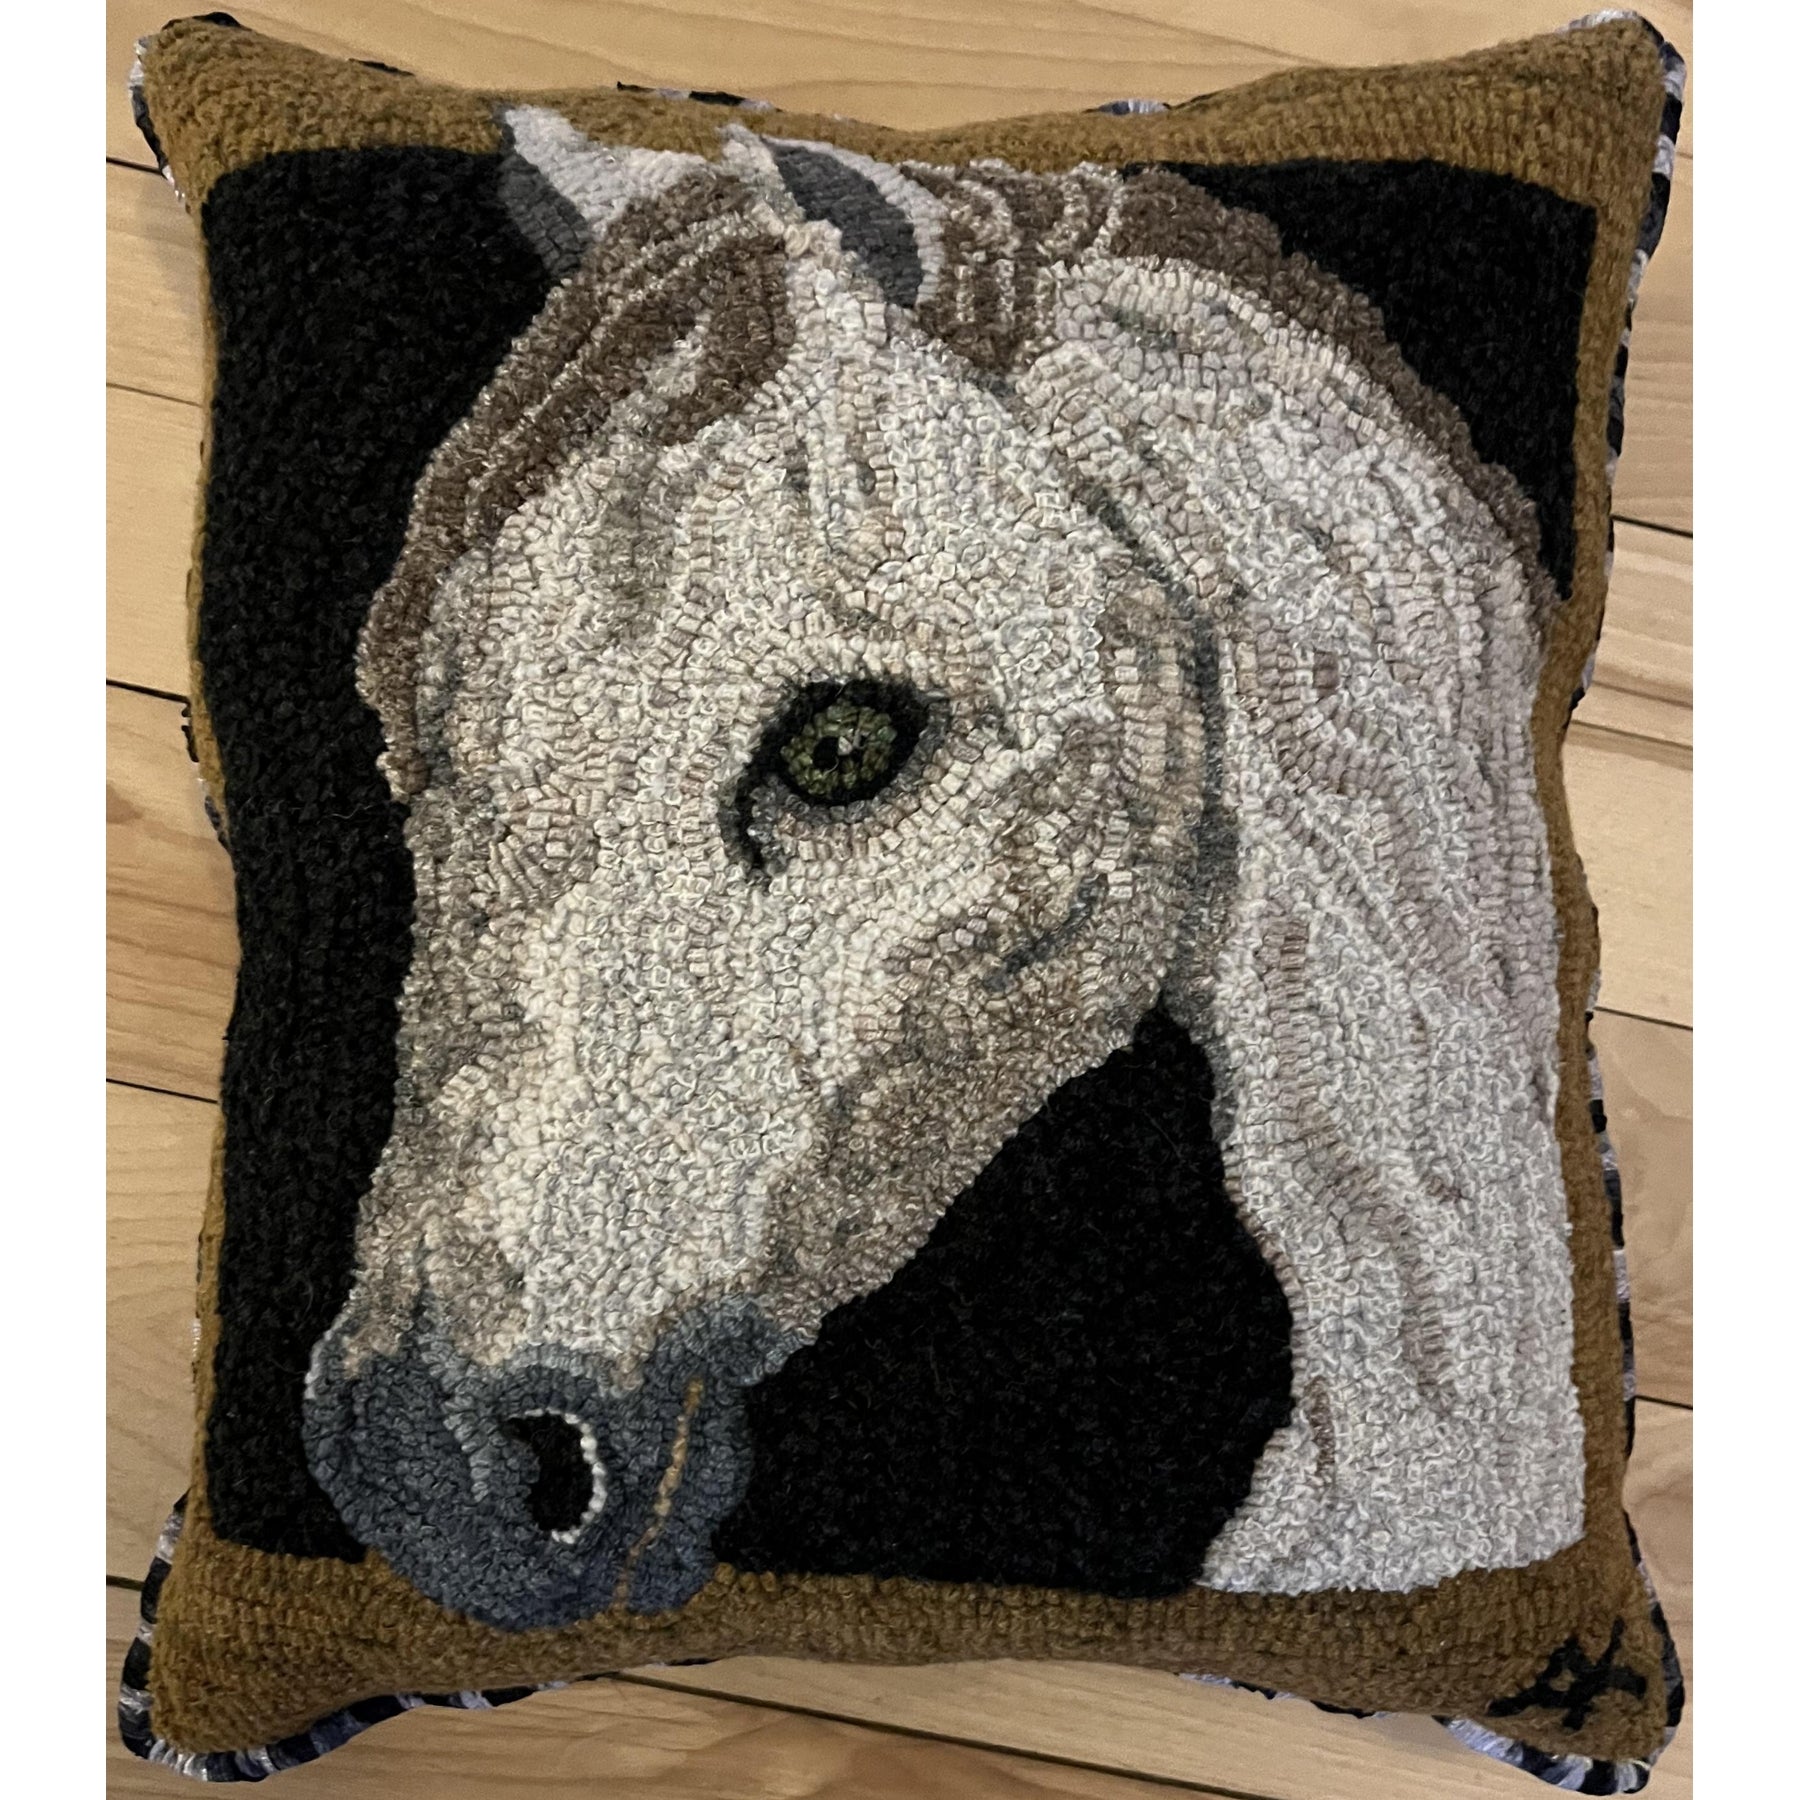 Horse Head, rug hooked by AJ Kemon